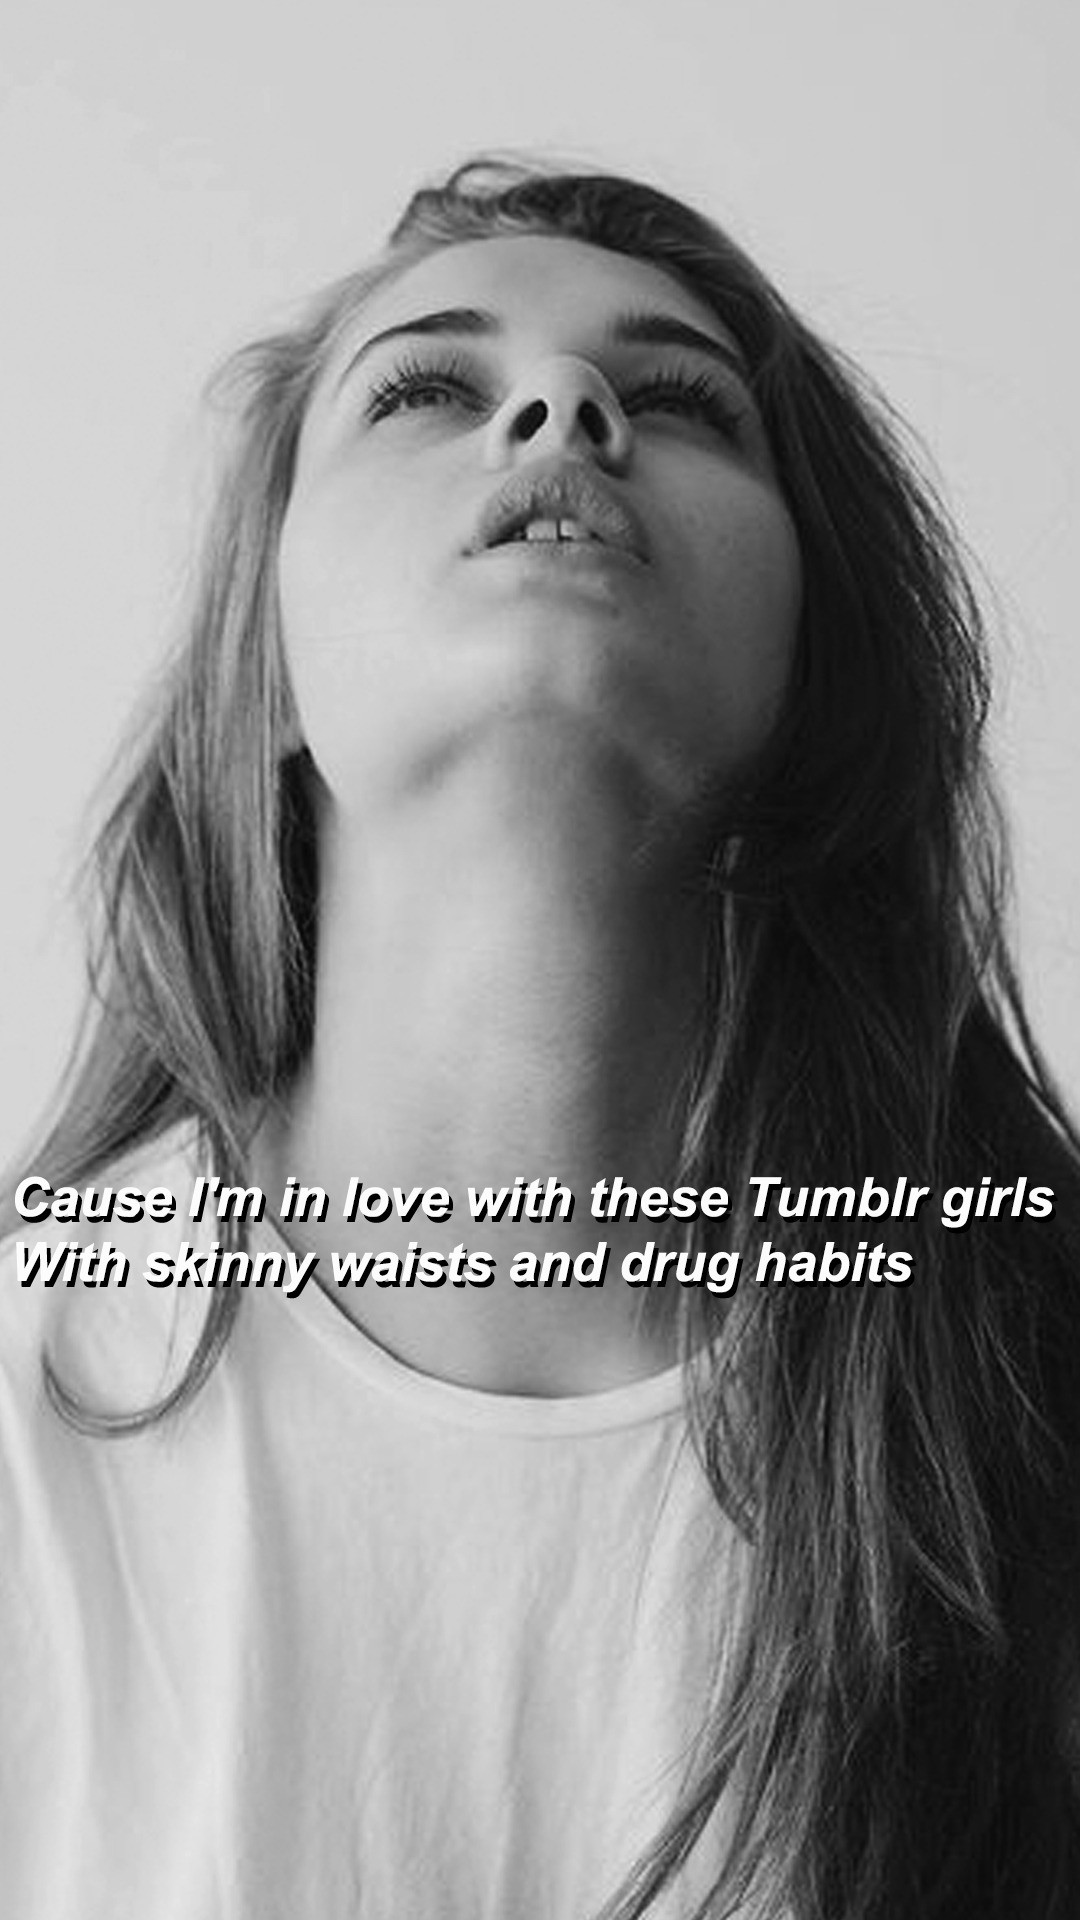 Tumblr girls песня. Tumblr girls g-Eazy.